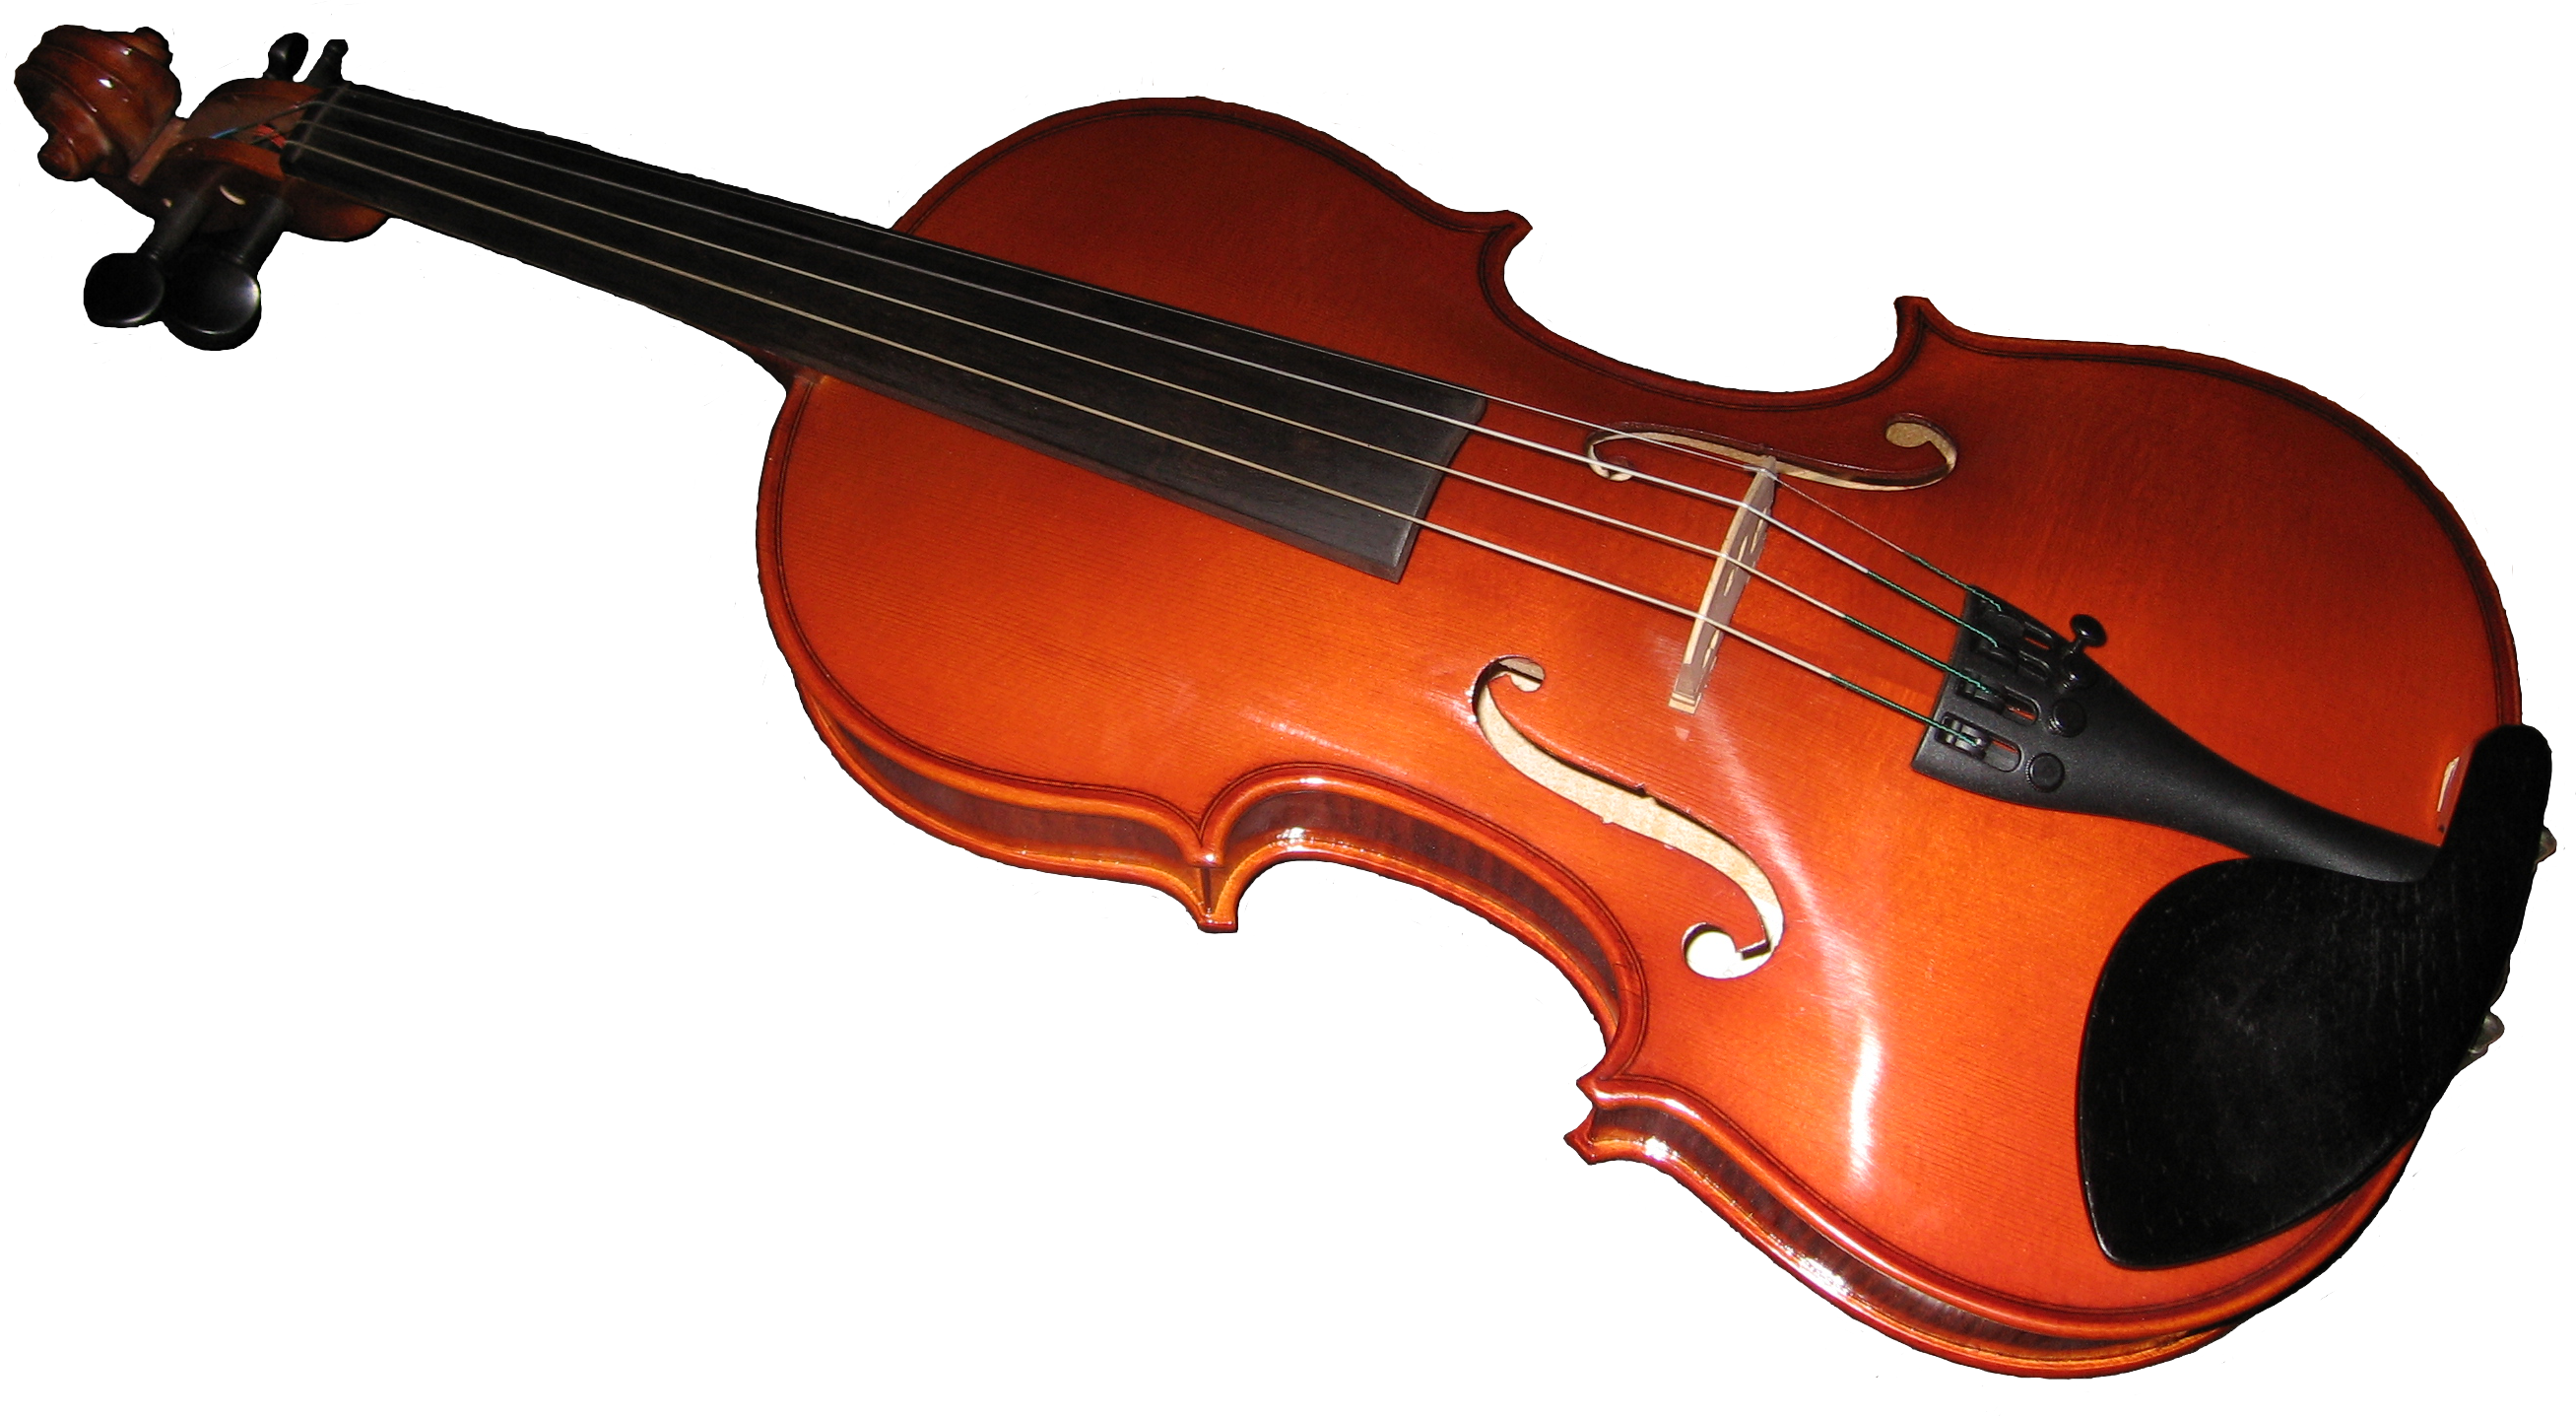 Violin PNG HD